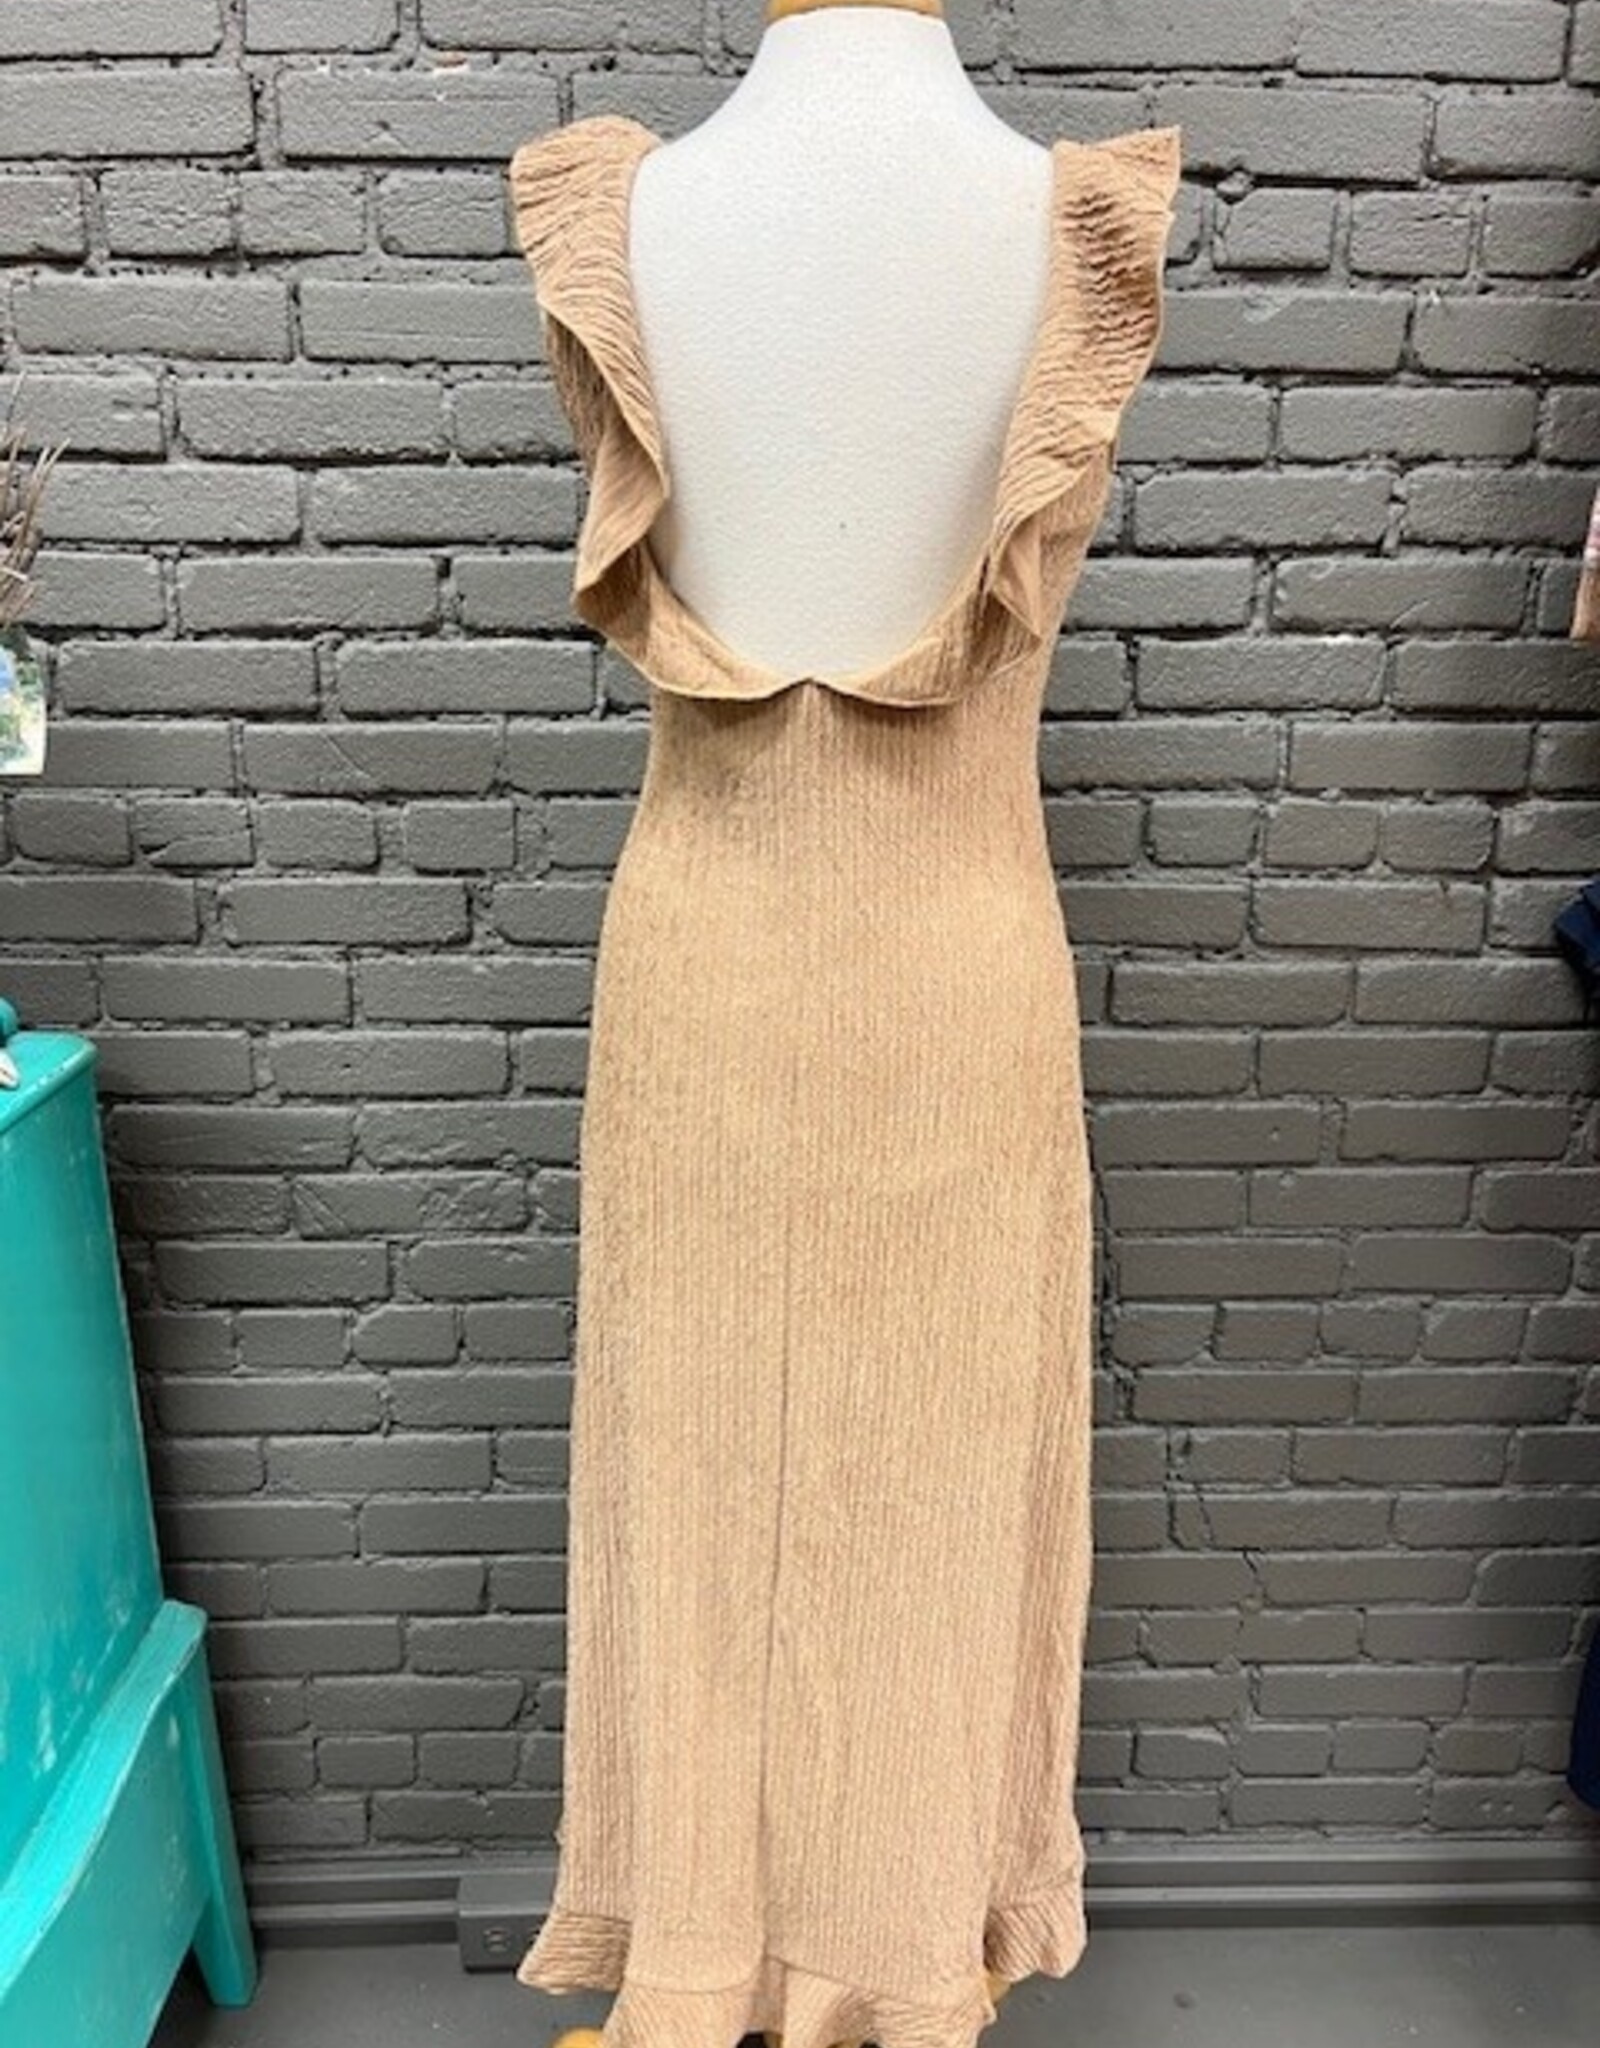 Dress Madeline Beige Textured Ruffle Slit Midi Dress